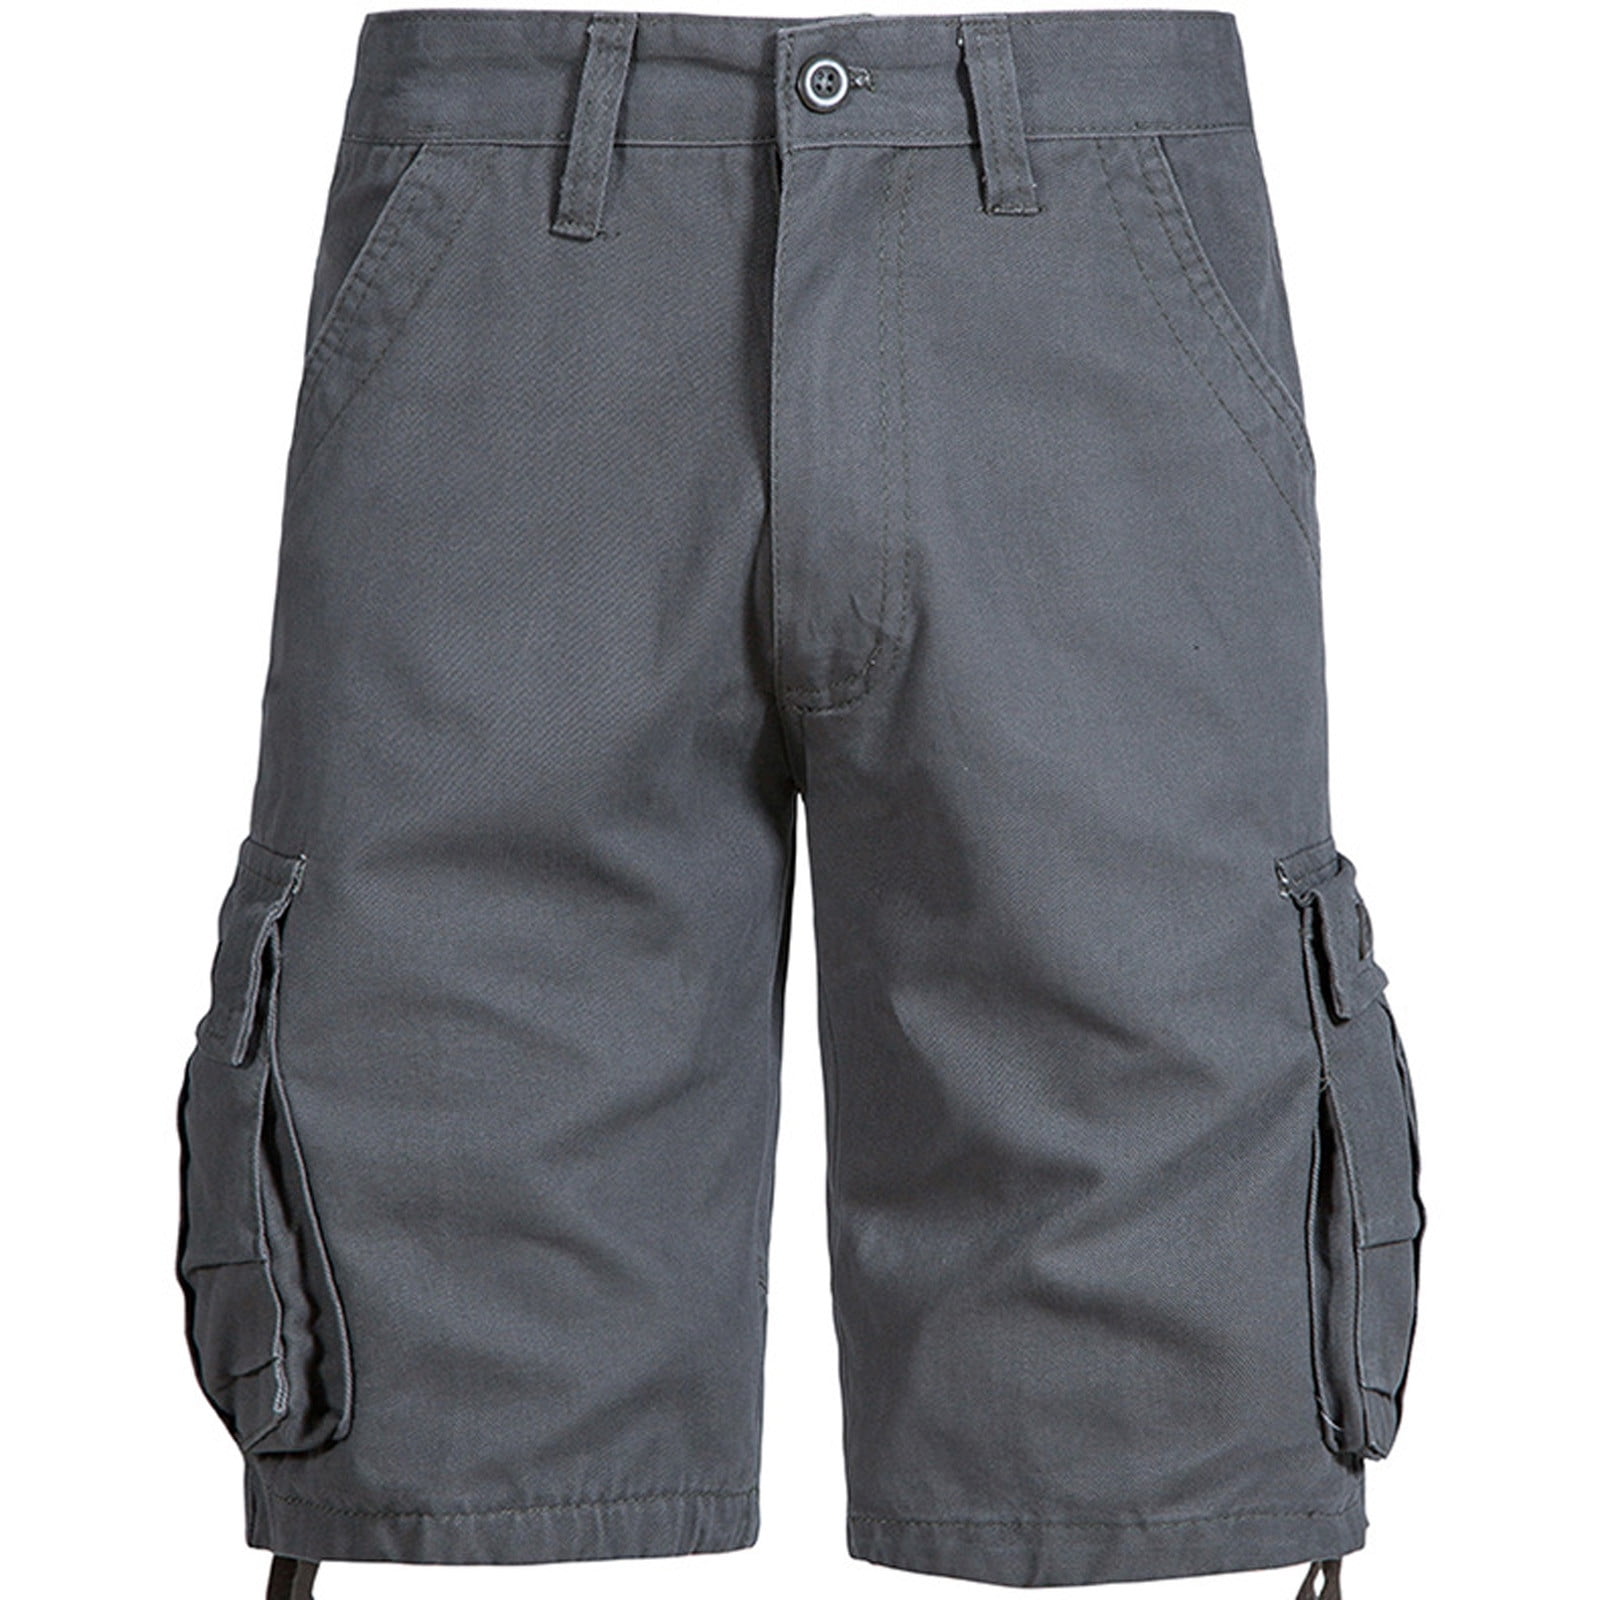 CaComMARK PI Men's Shorts Clearance Mid-Waist Work Shorts Multi-Pocket ...